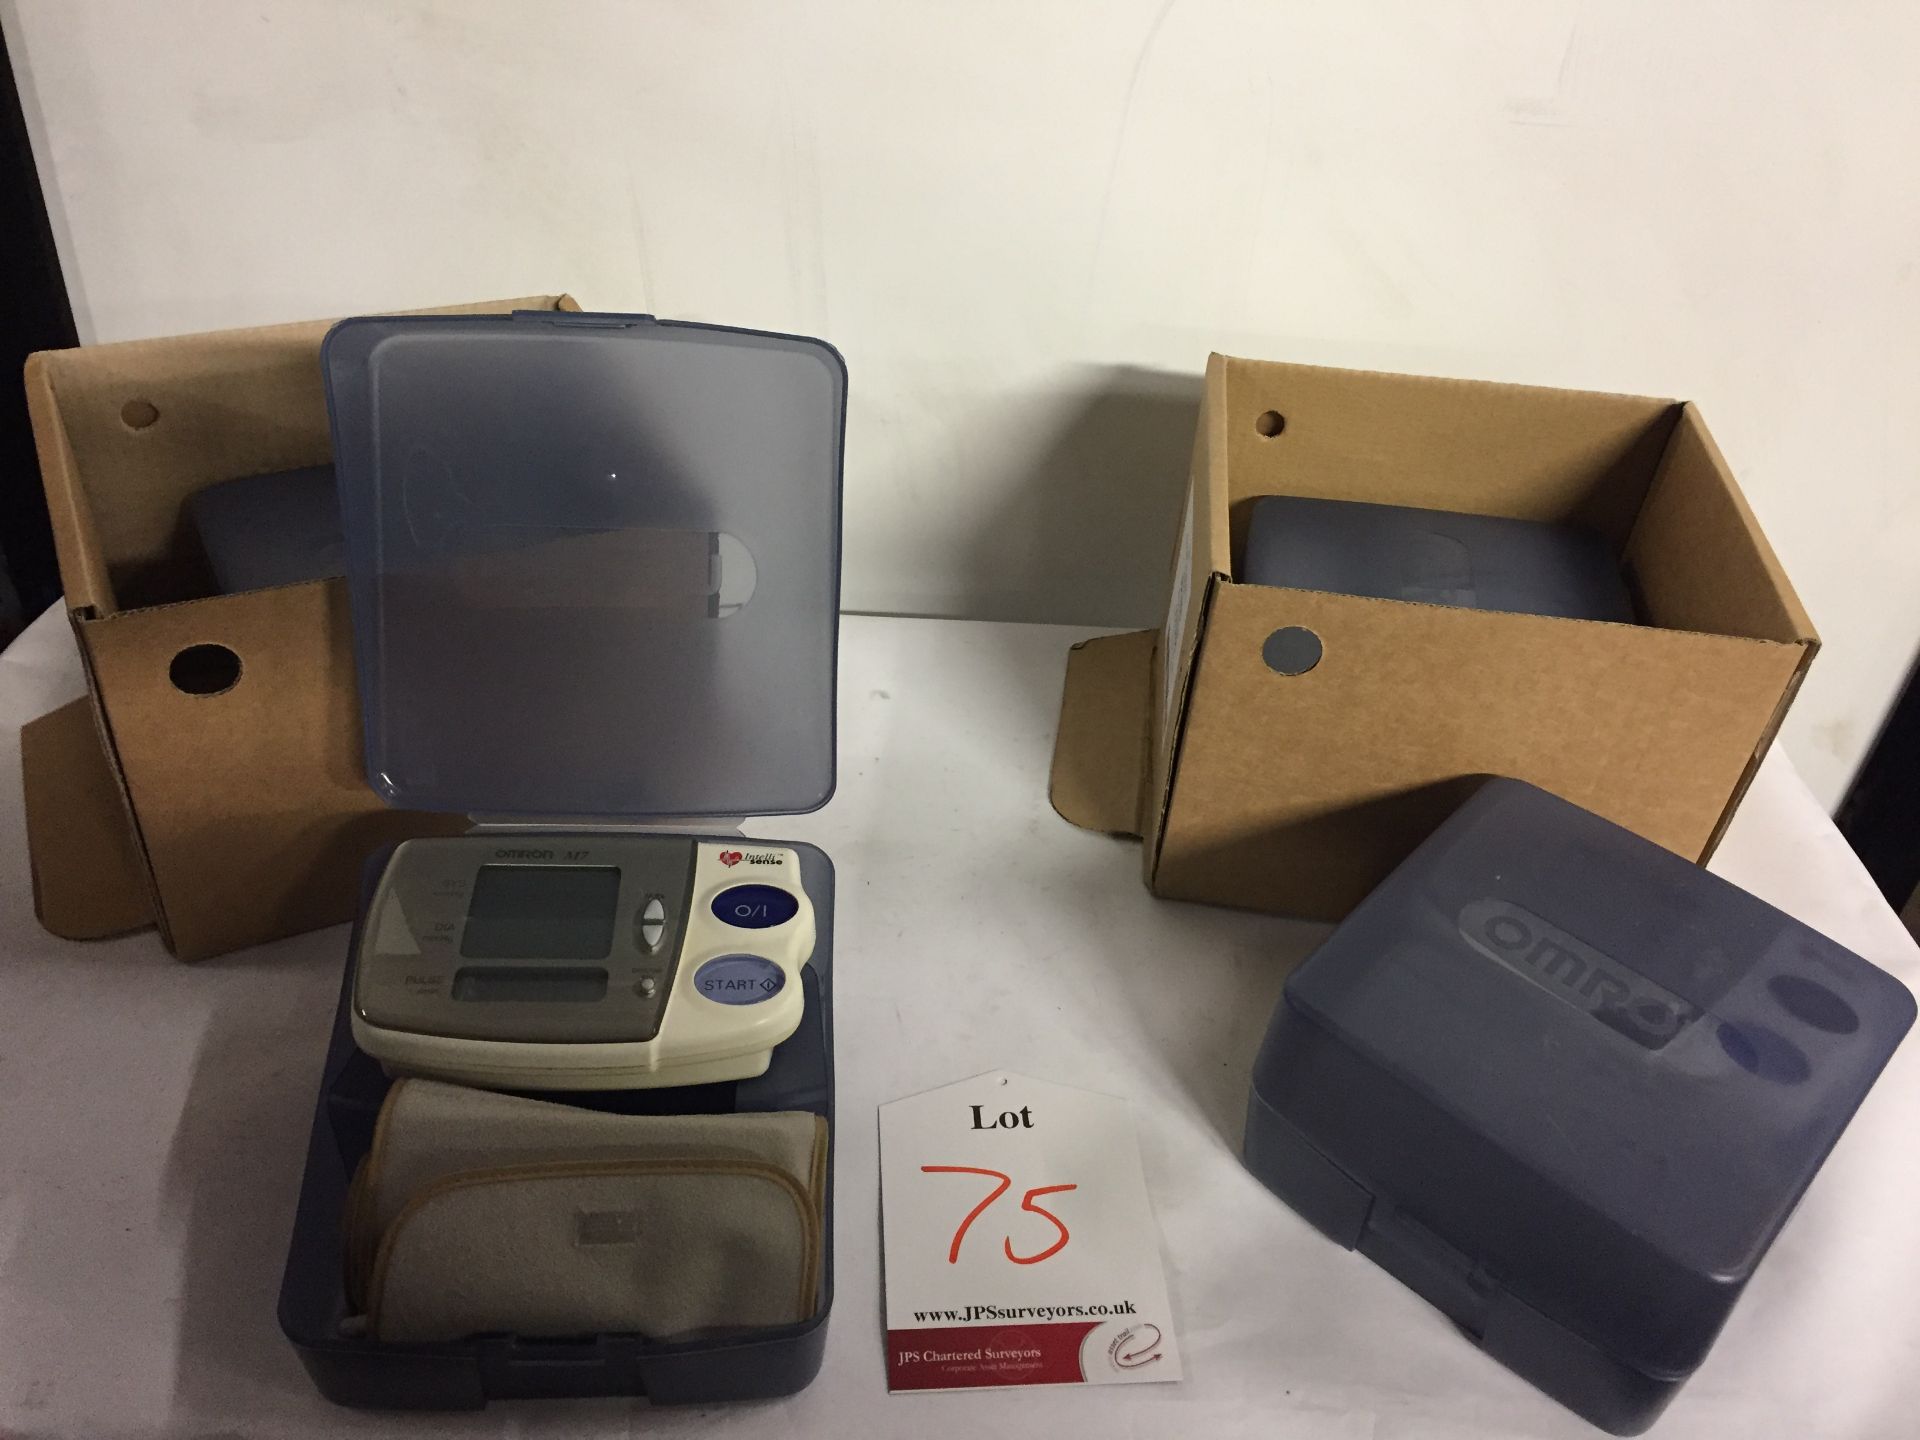 5 Omron blood pressure monitor, Model M7